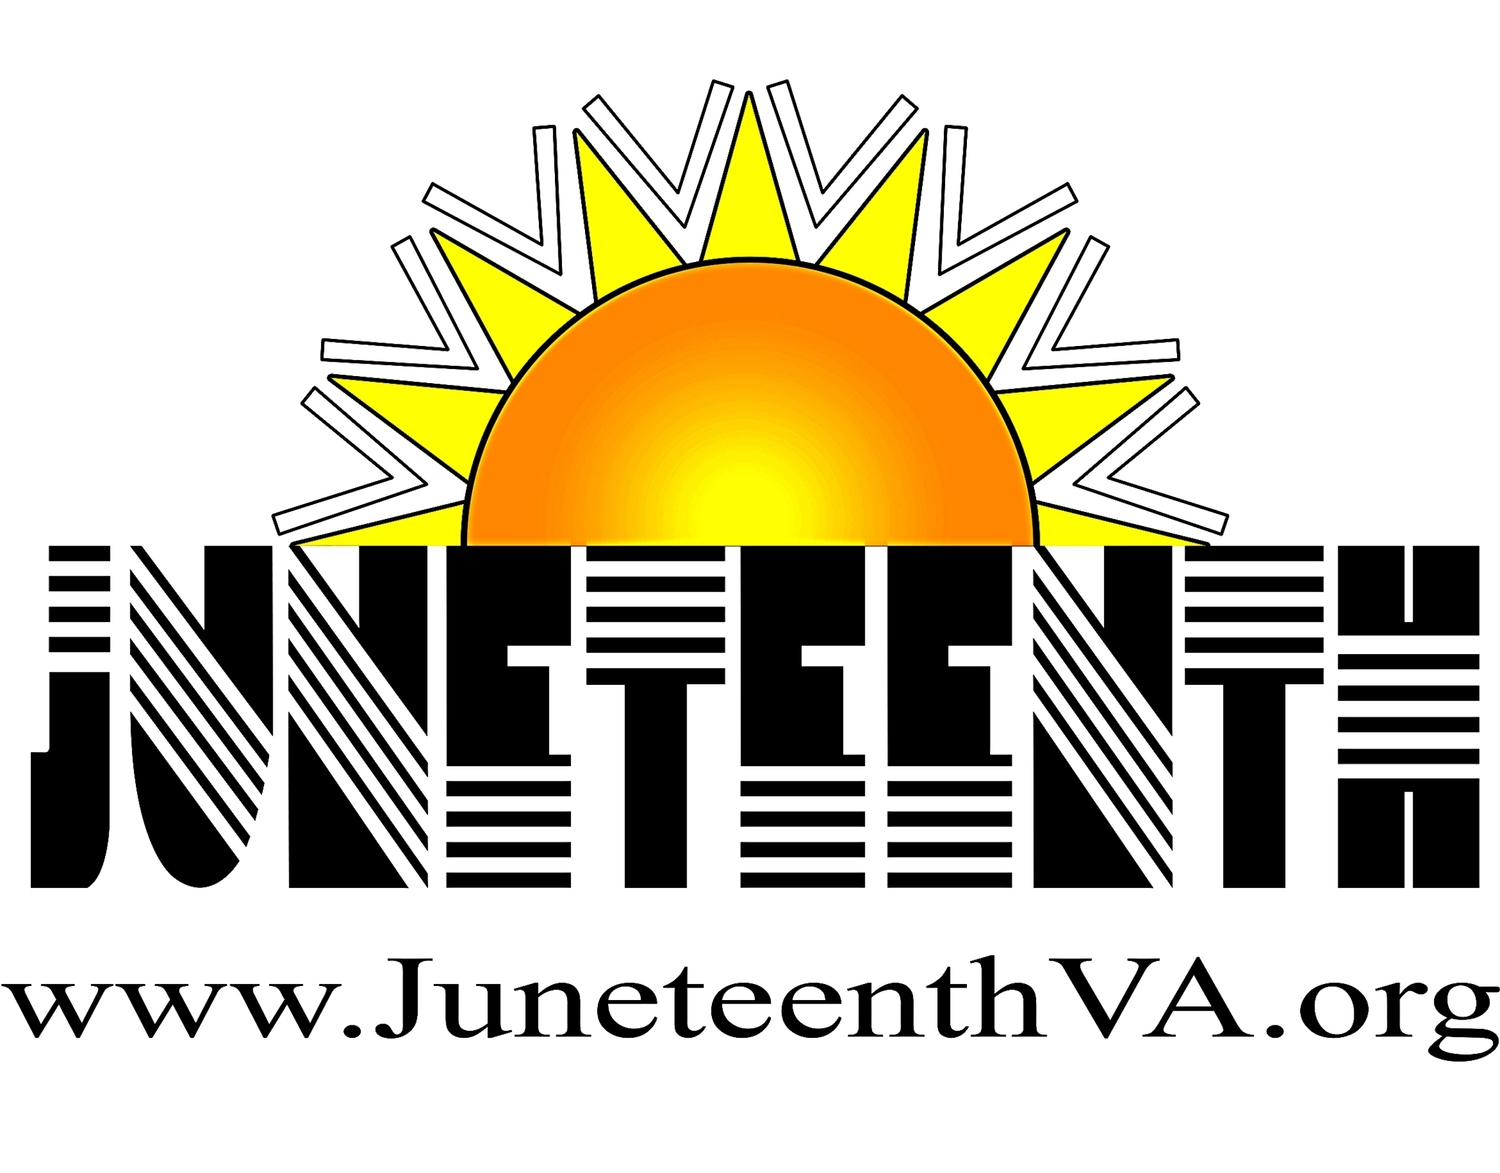 Juneteenth VA logo